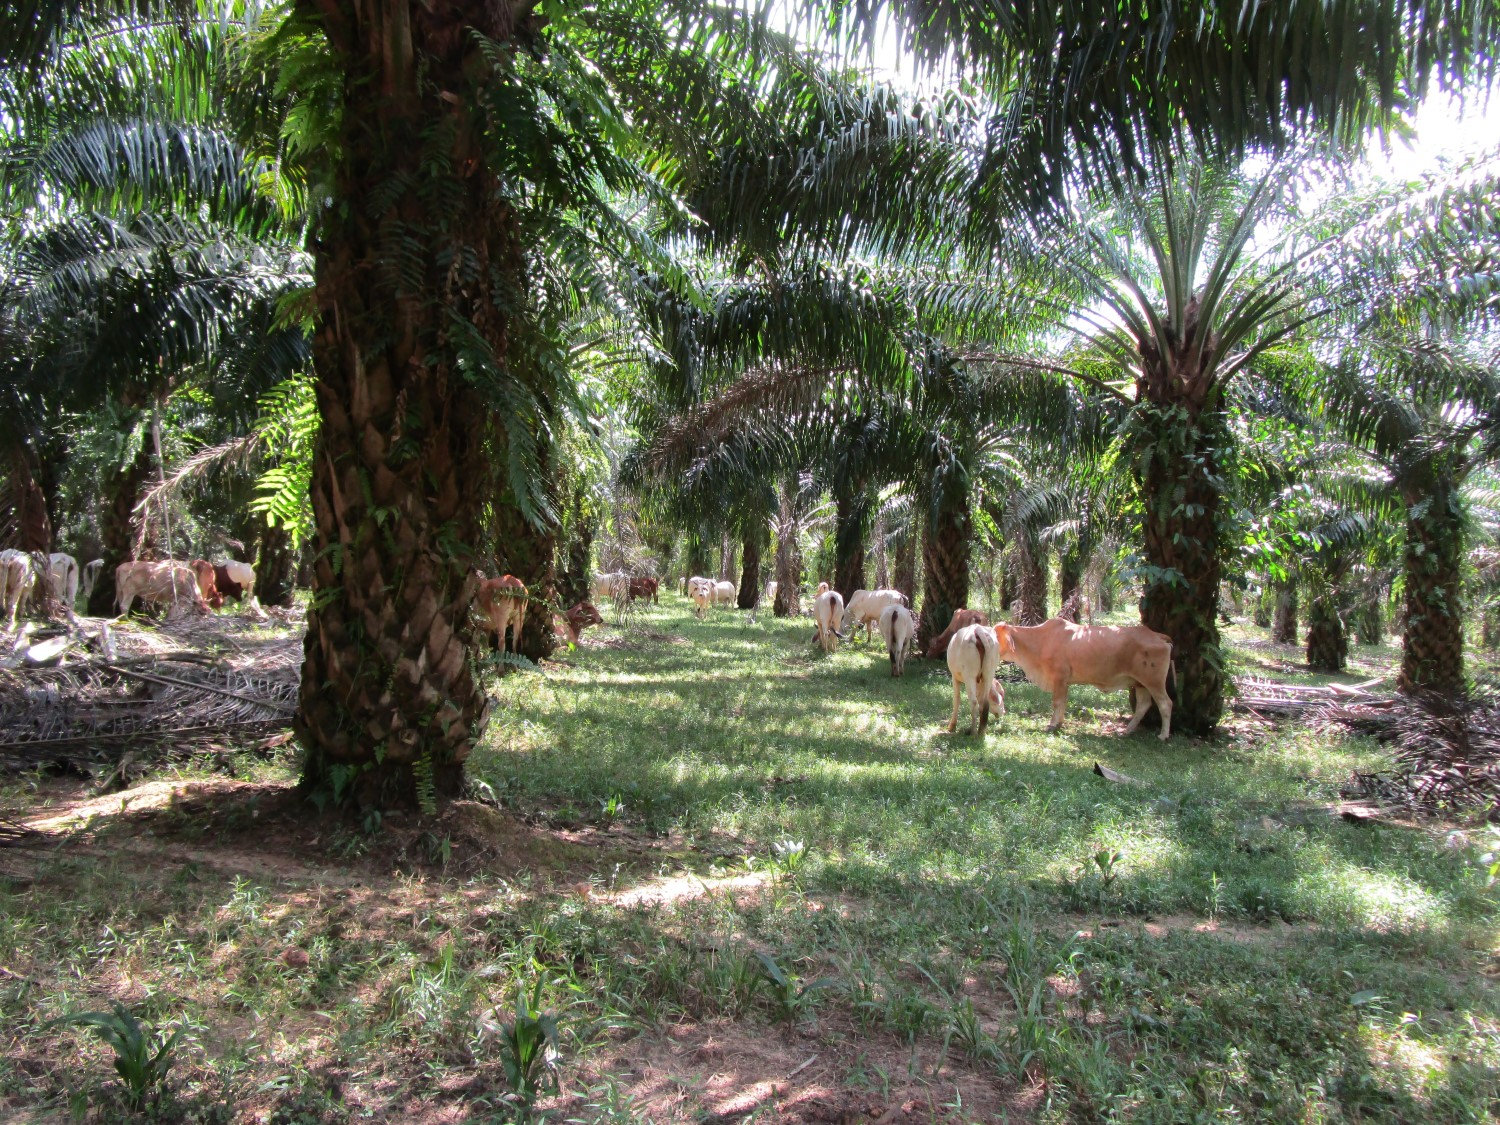 Grazing livestock on a plantation